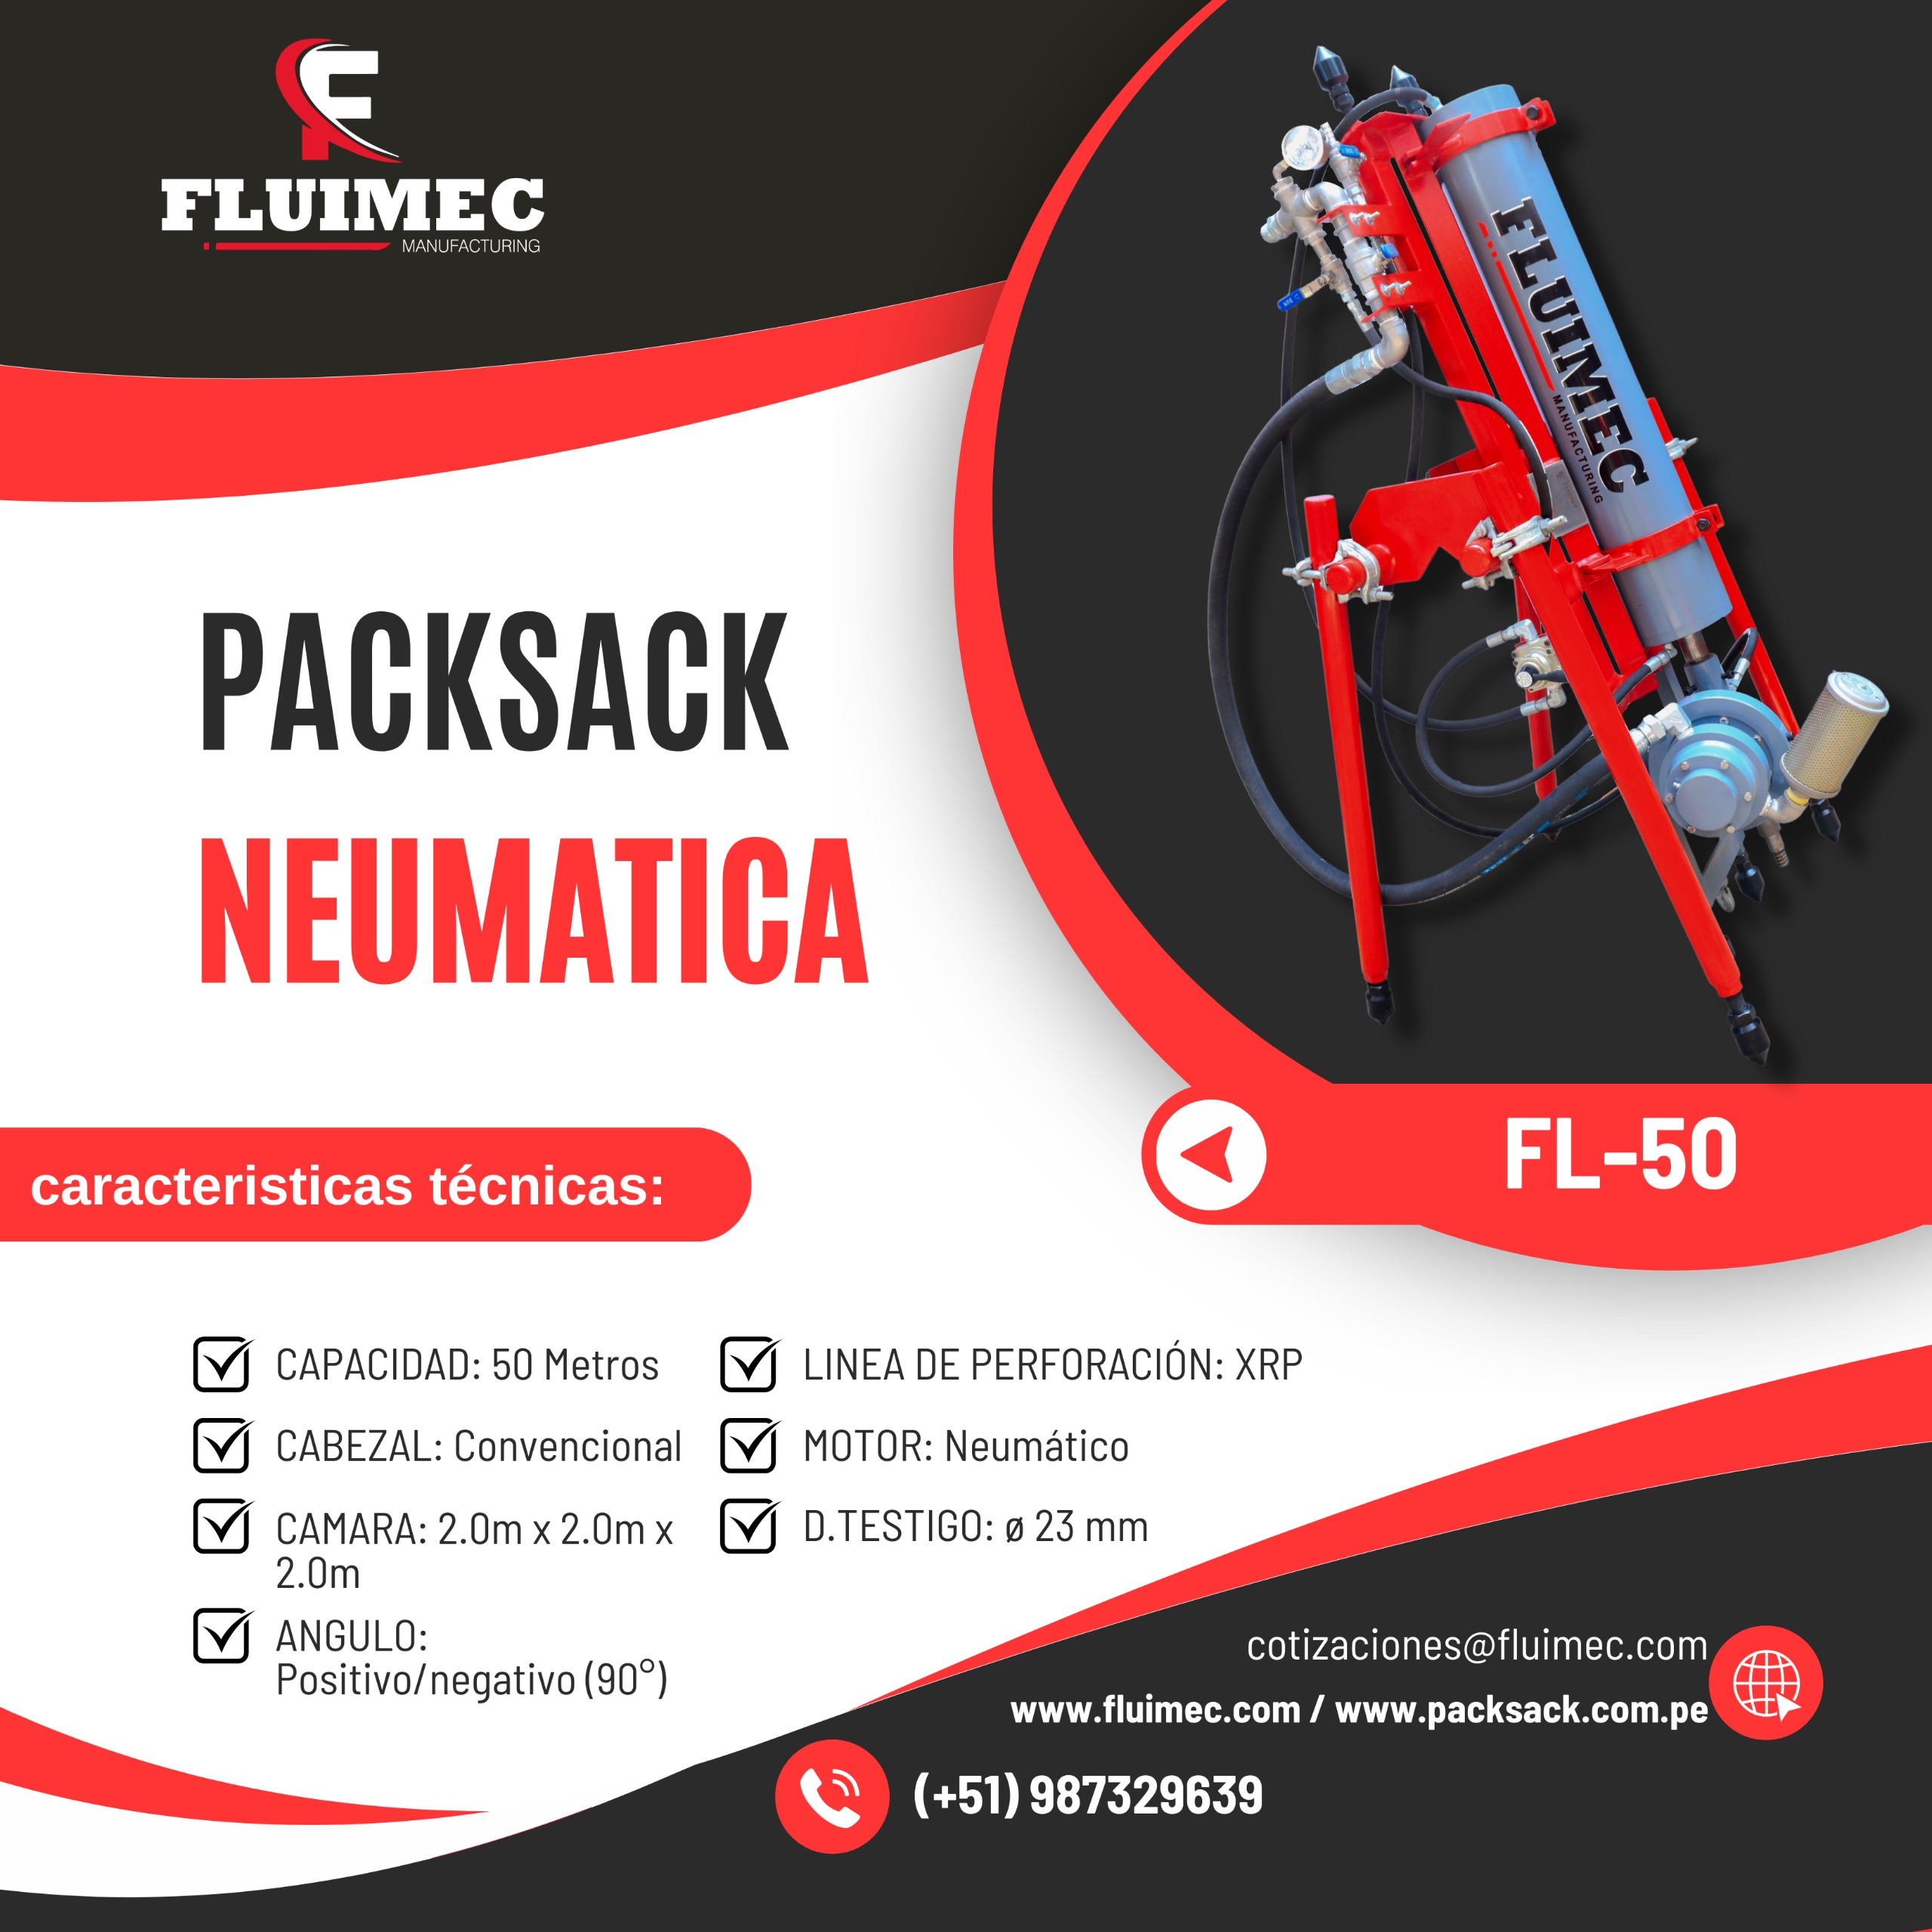 Packsack FL-50 - Muestreo exitoso